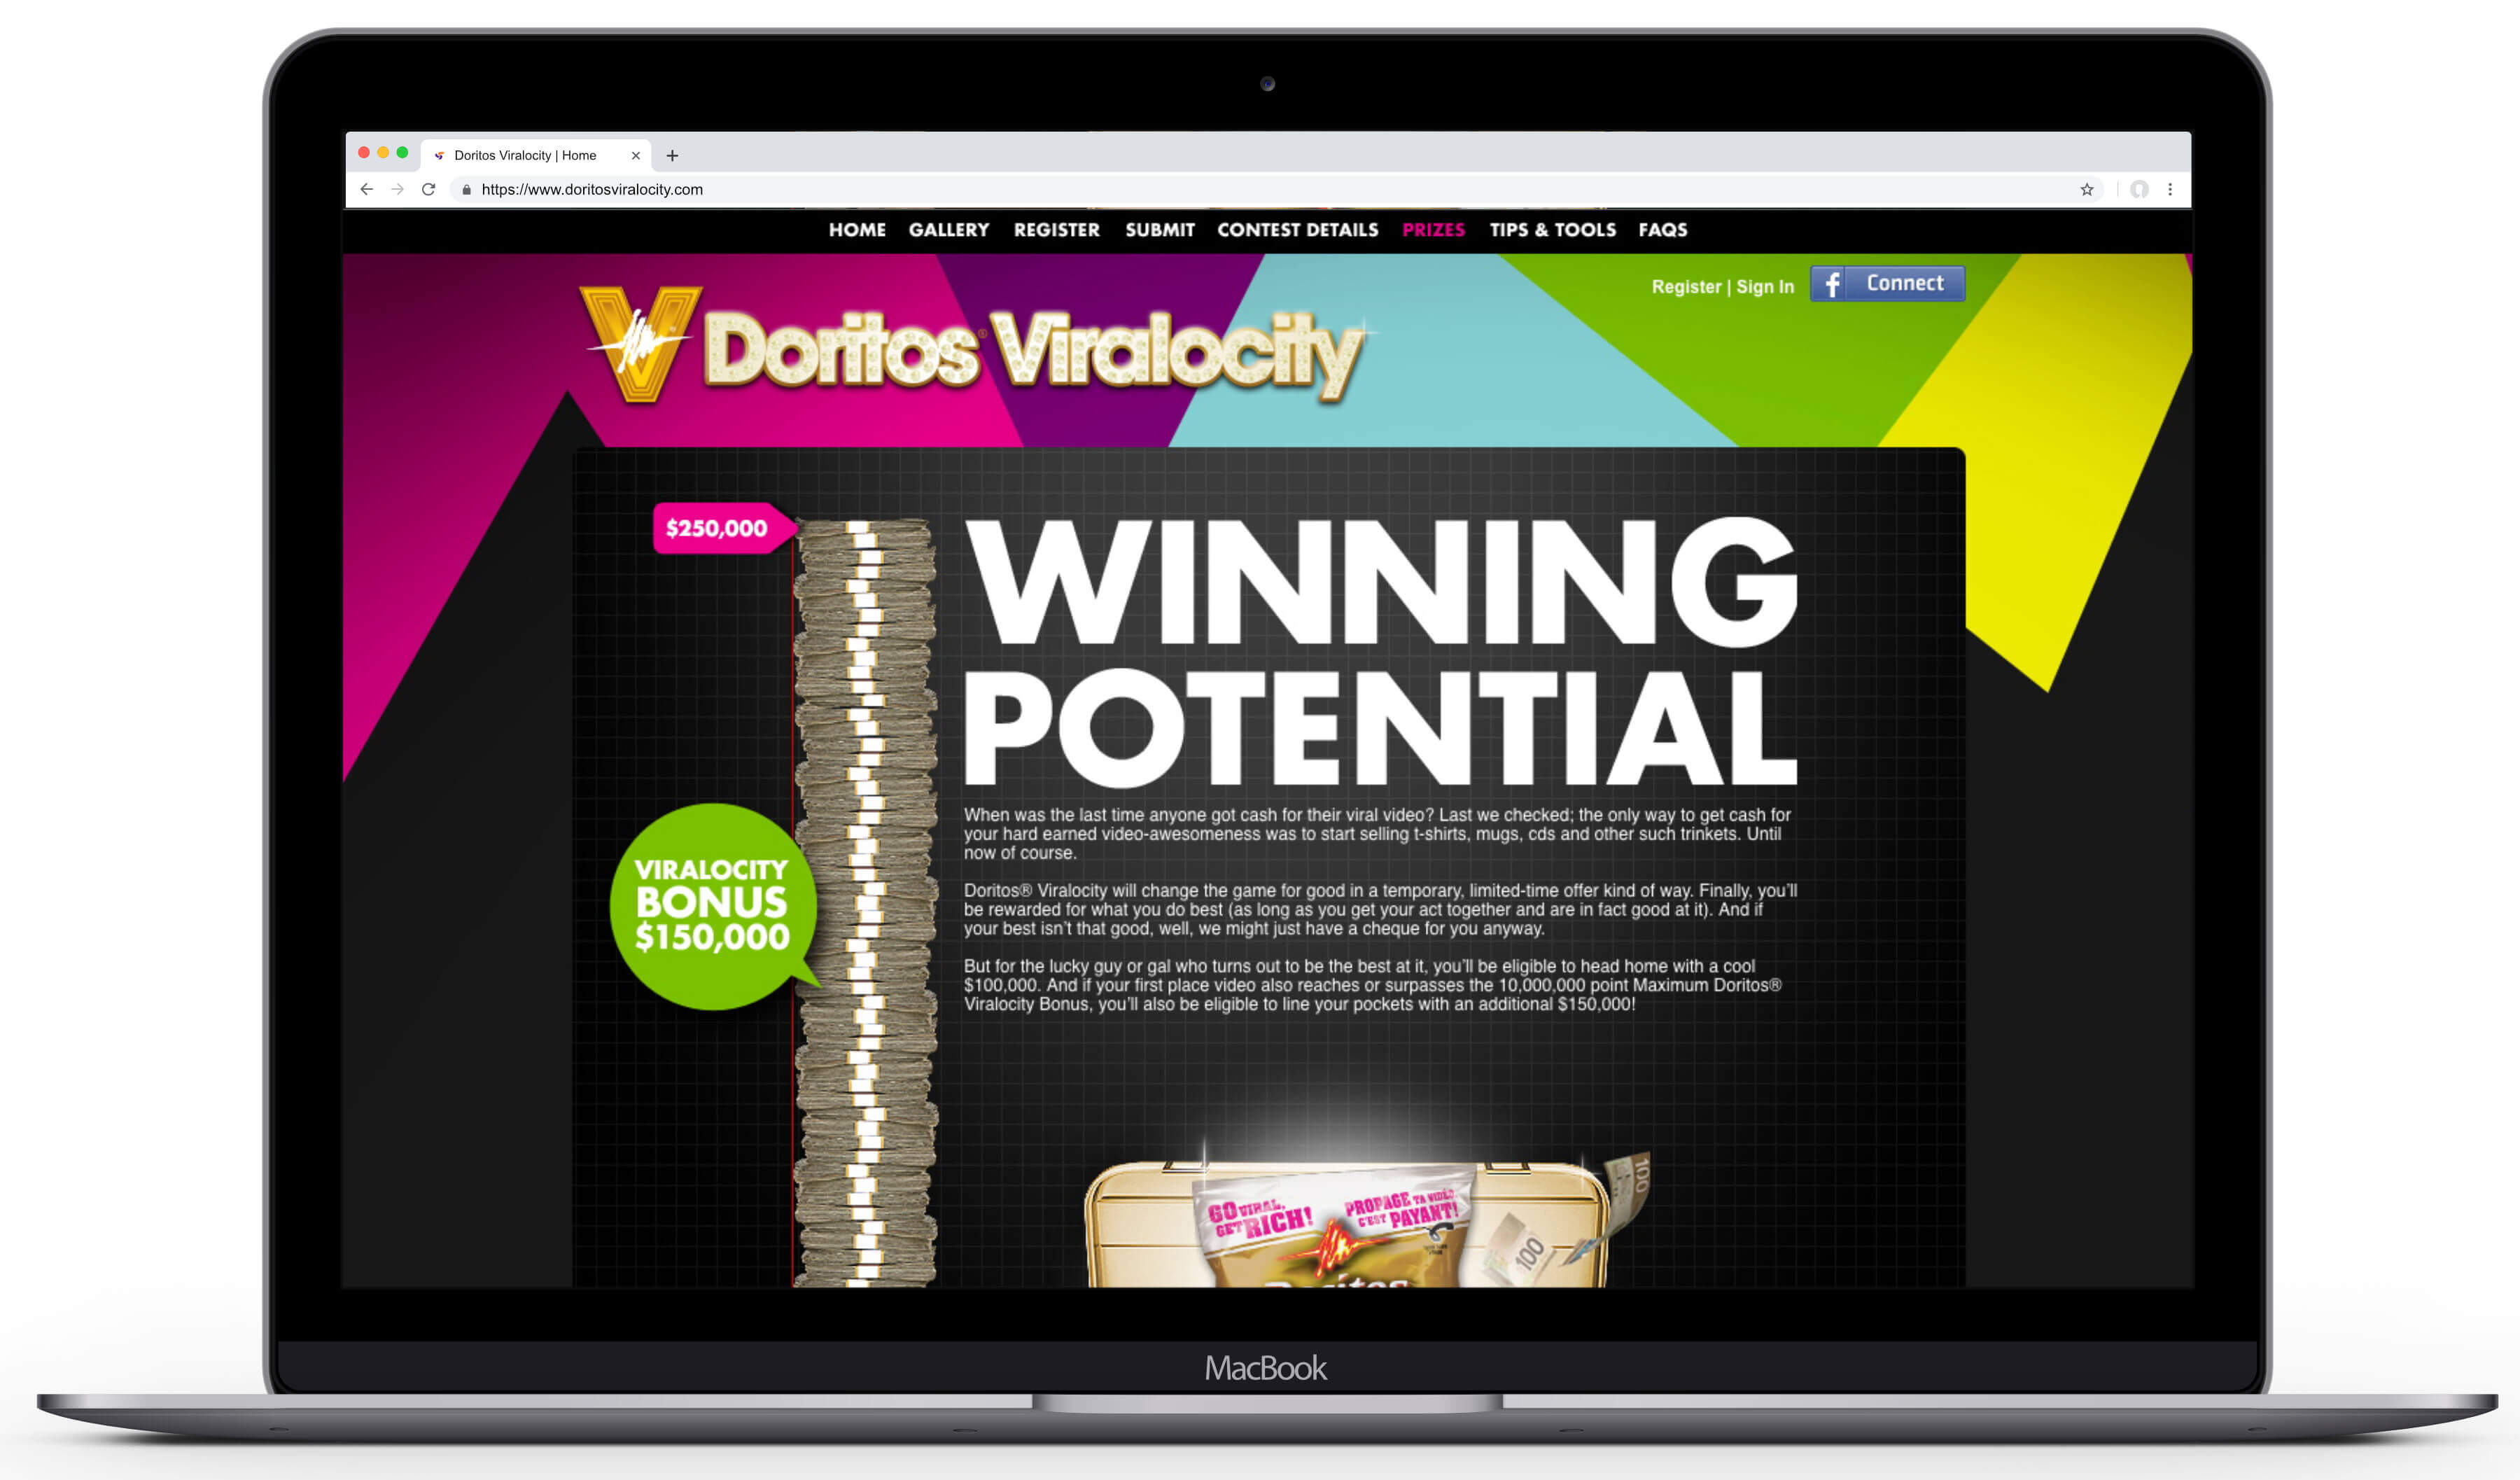 viralocity-screens-macbook-04-prizes